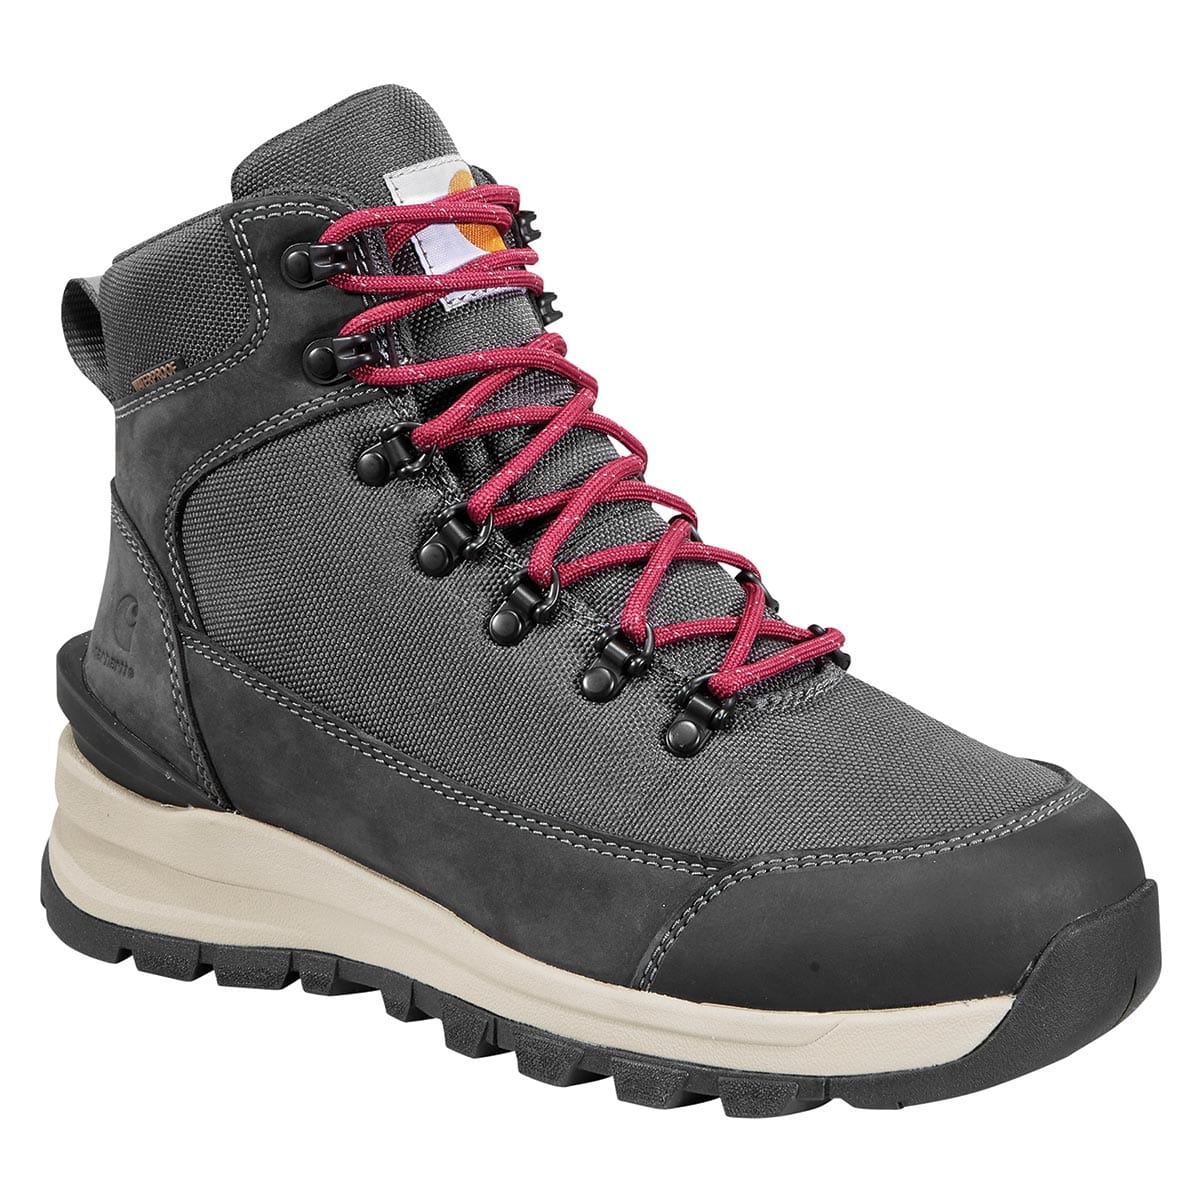 Carhartt Women's Gilmore 6" Work Hiker Boots - Dark Gray